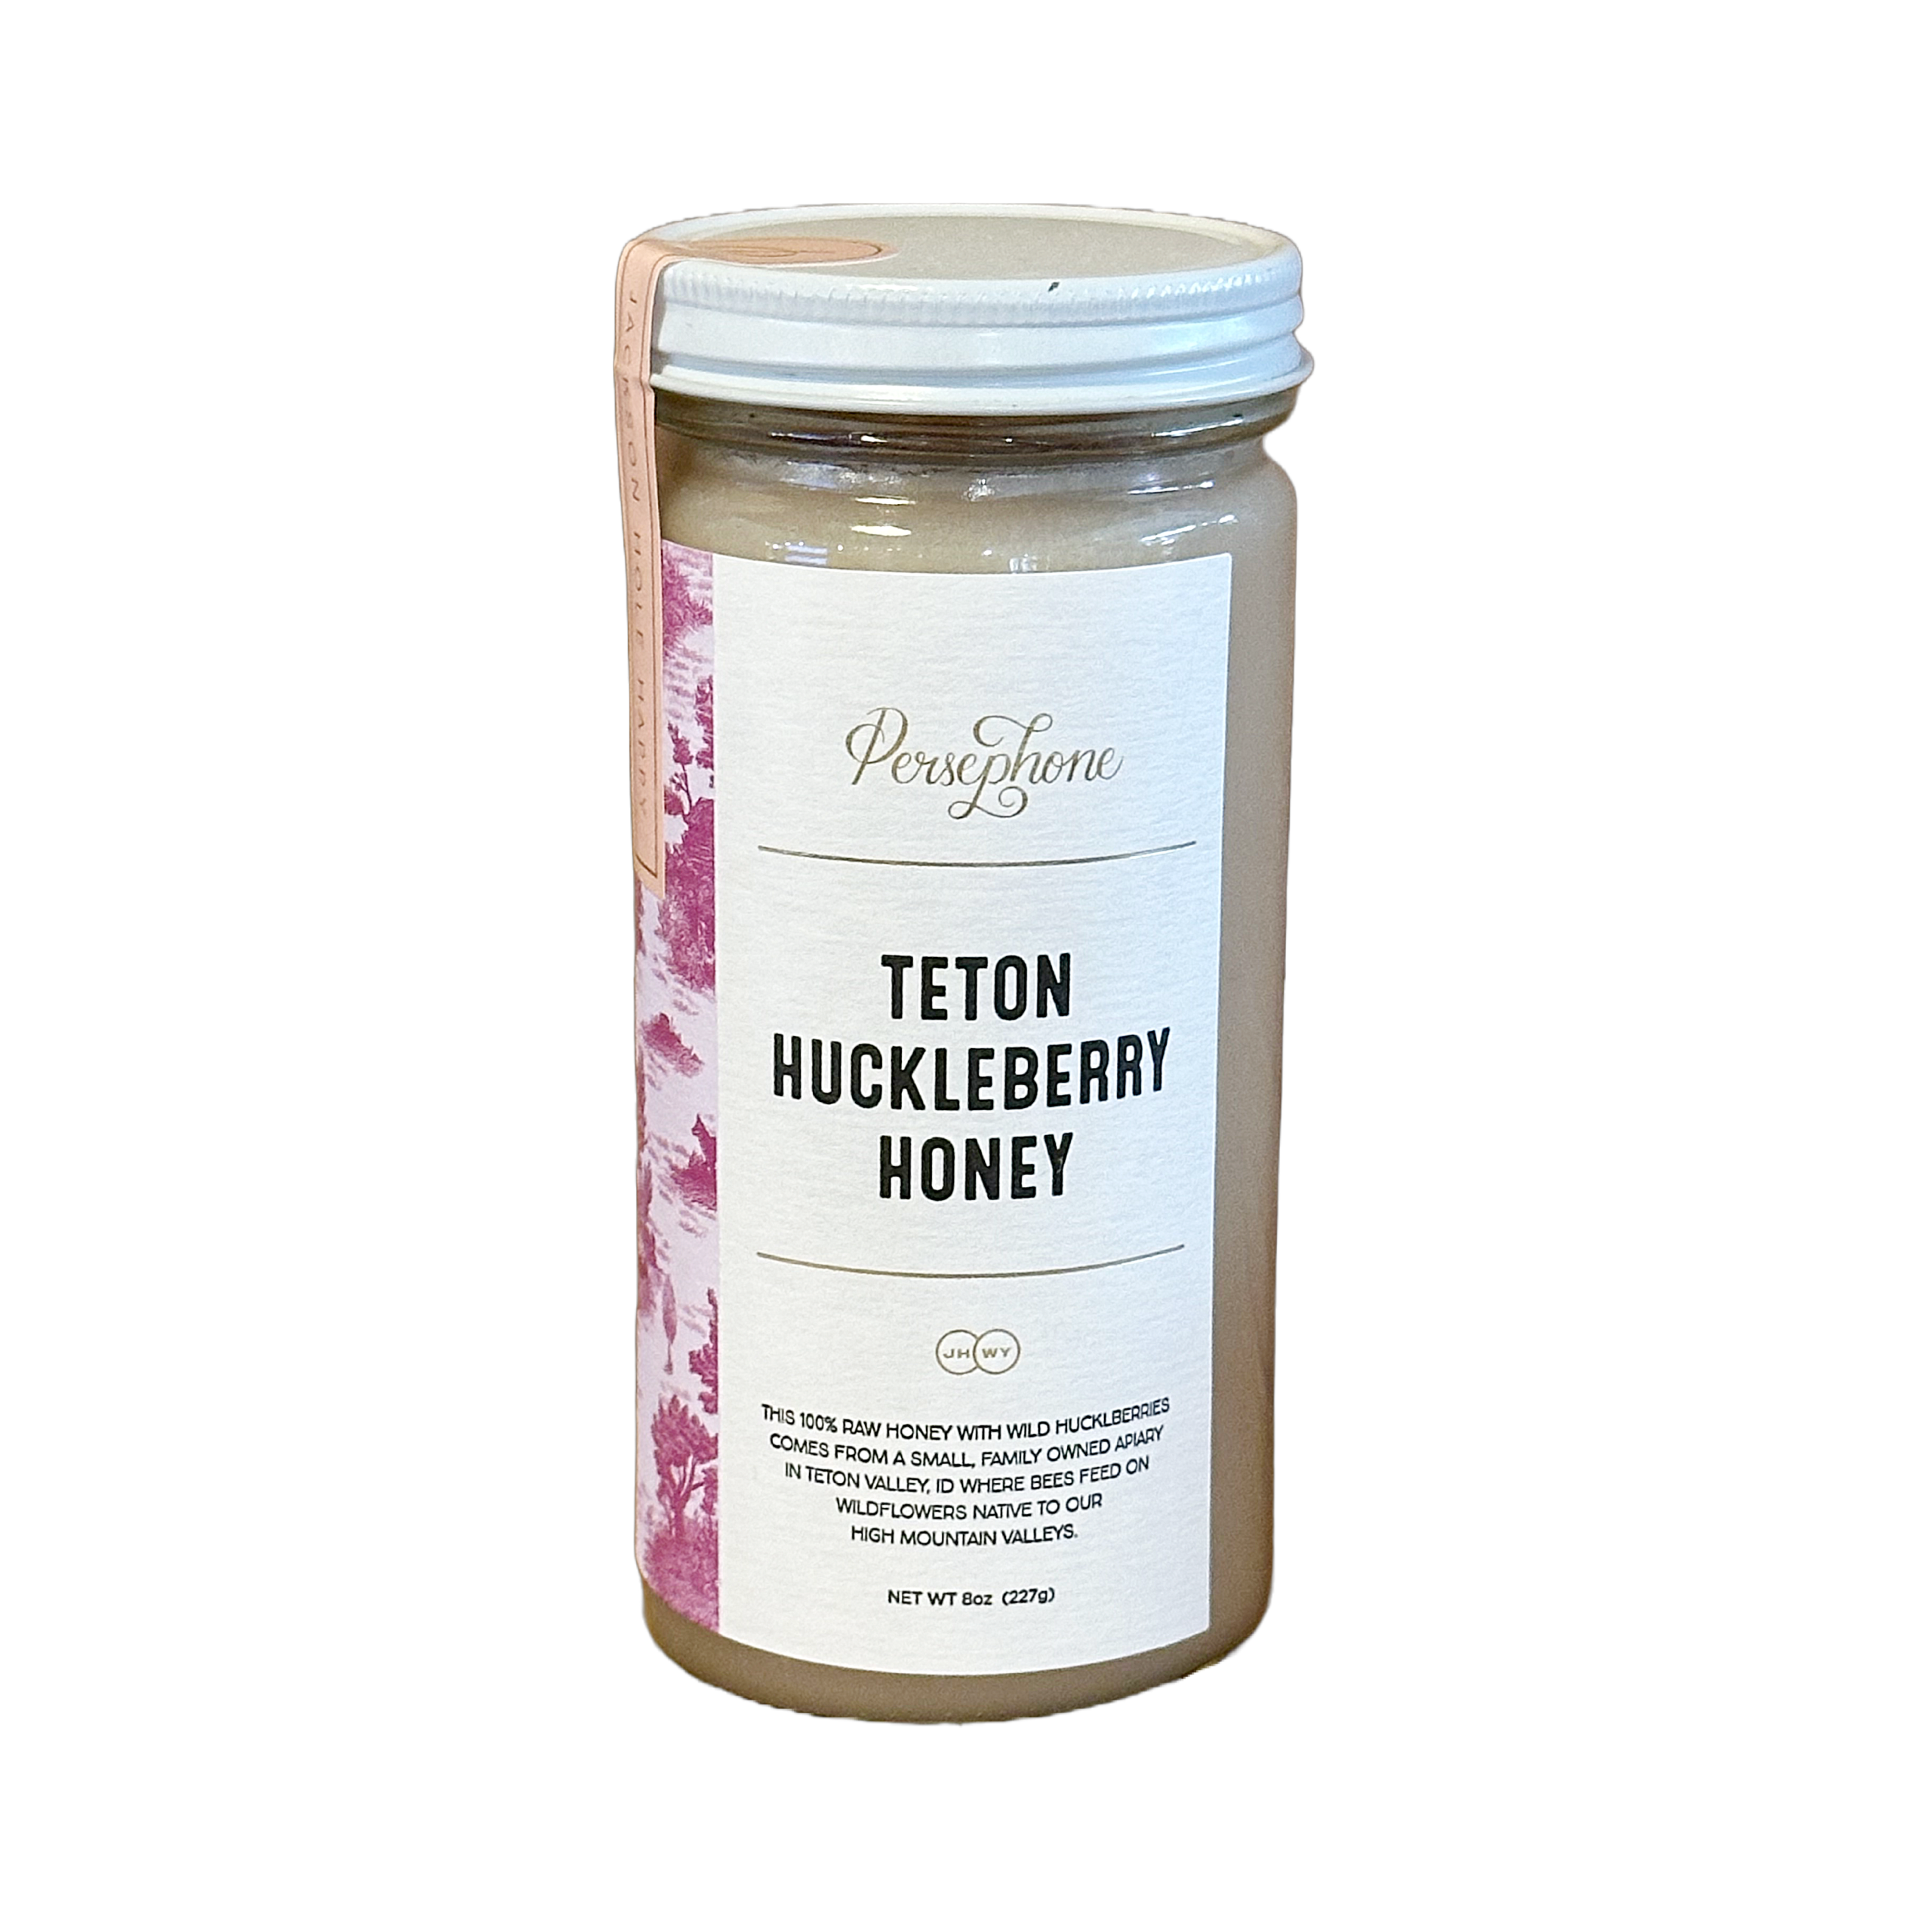 Teton Huckleberry Honey